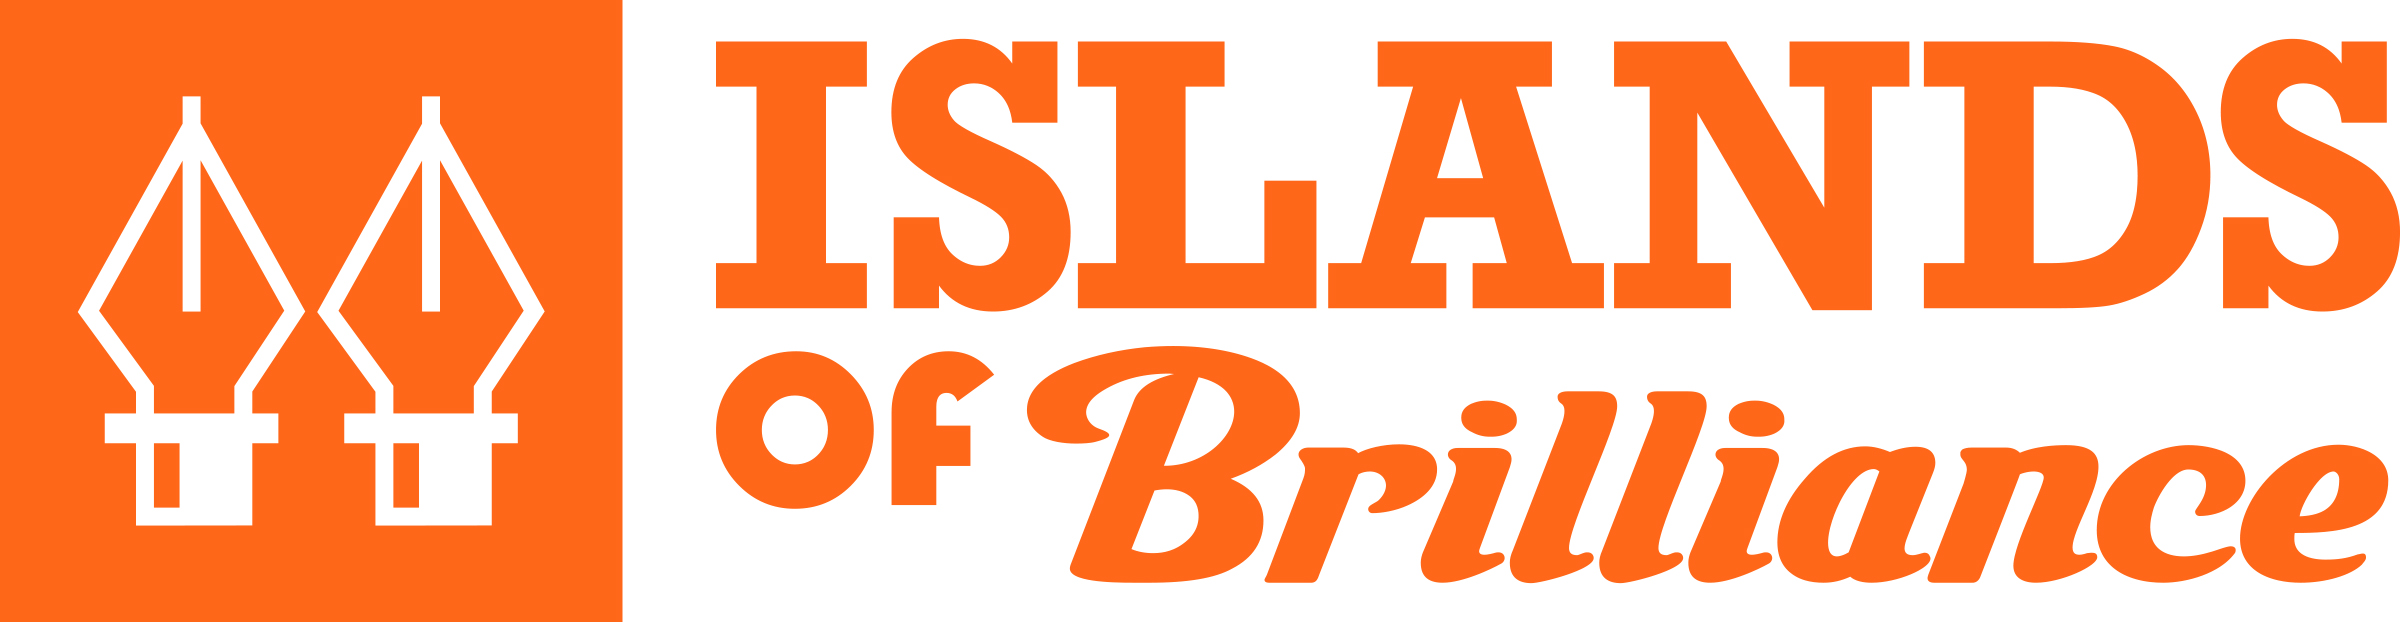 Islands of Brilliance Logo